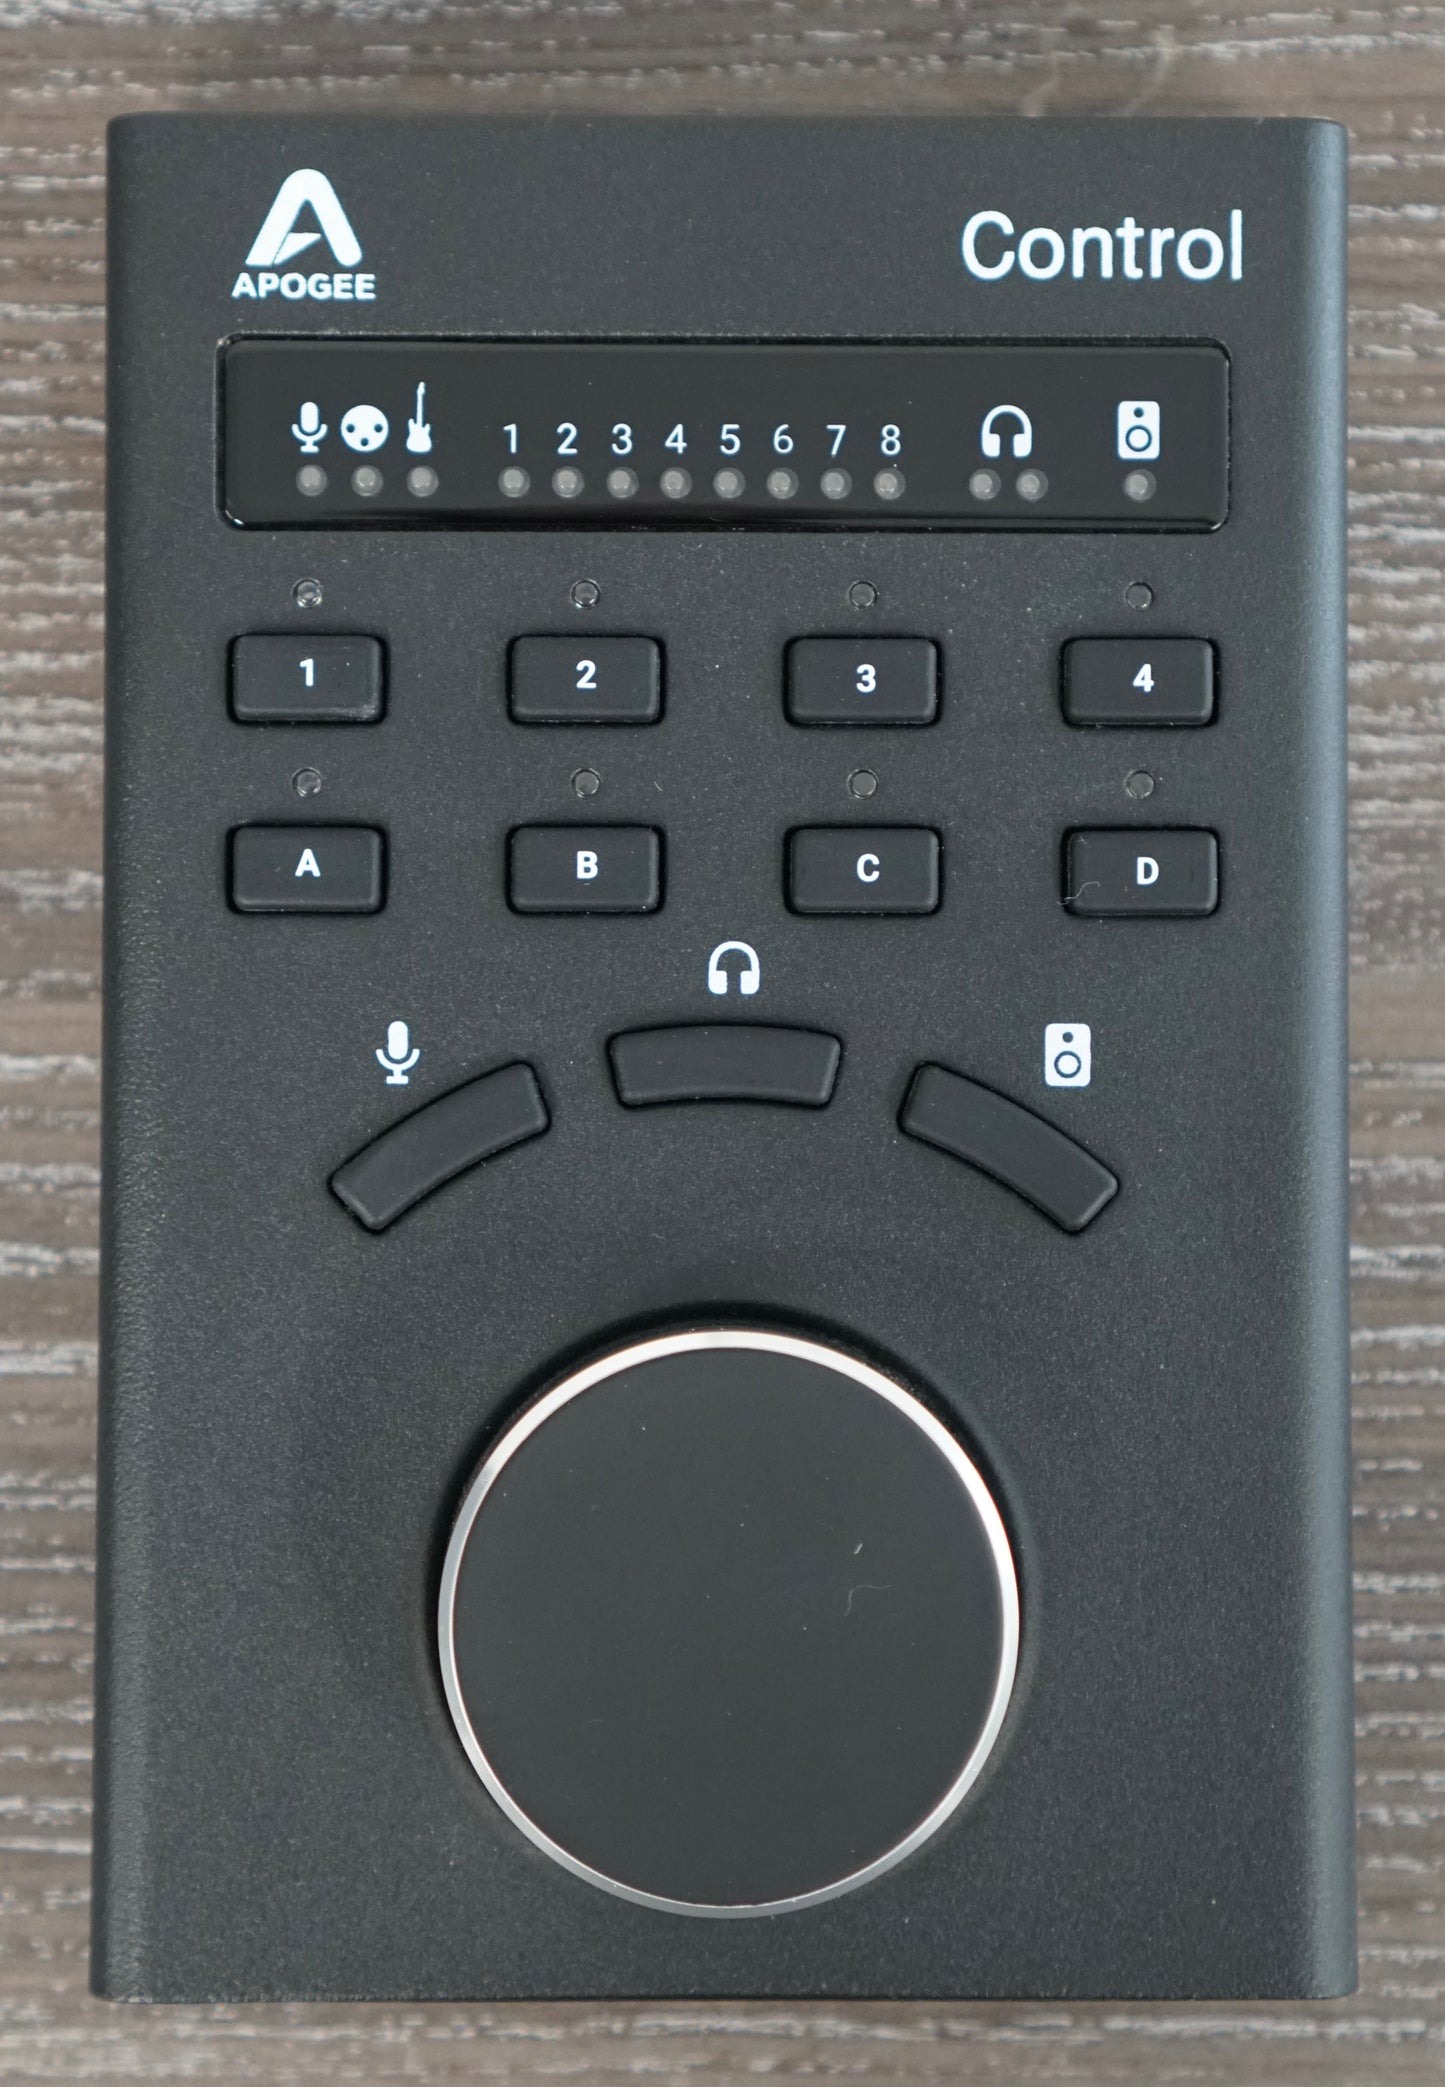 Apogee Ensemble w/ Control Remote